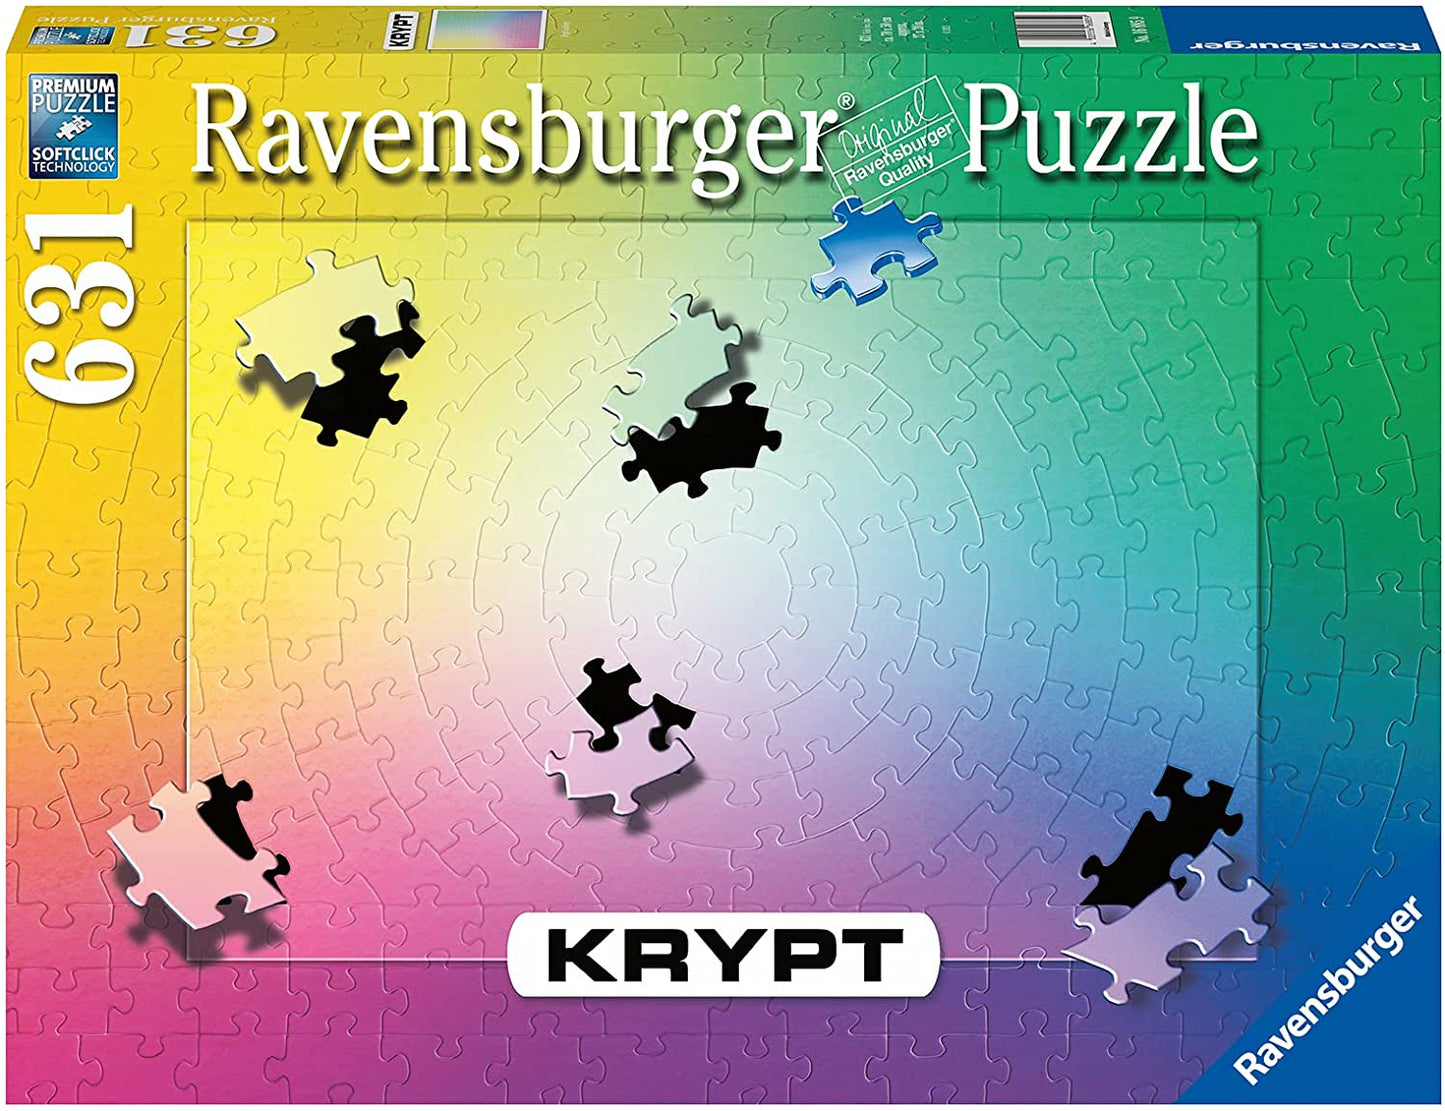 Ravensburger - Krypt Gradiant  - 631 Piece Jigsaw Puzzle